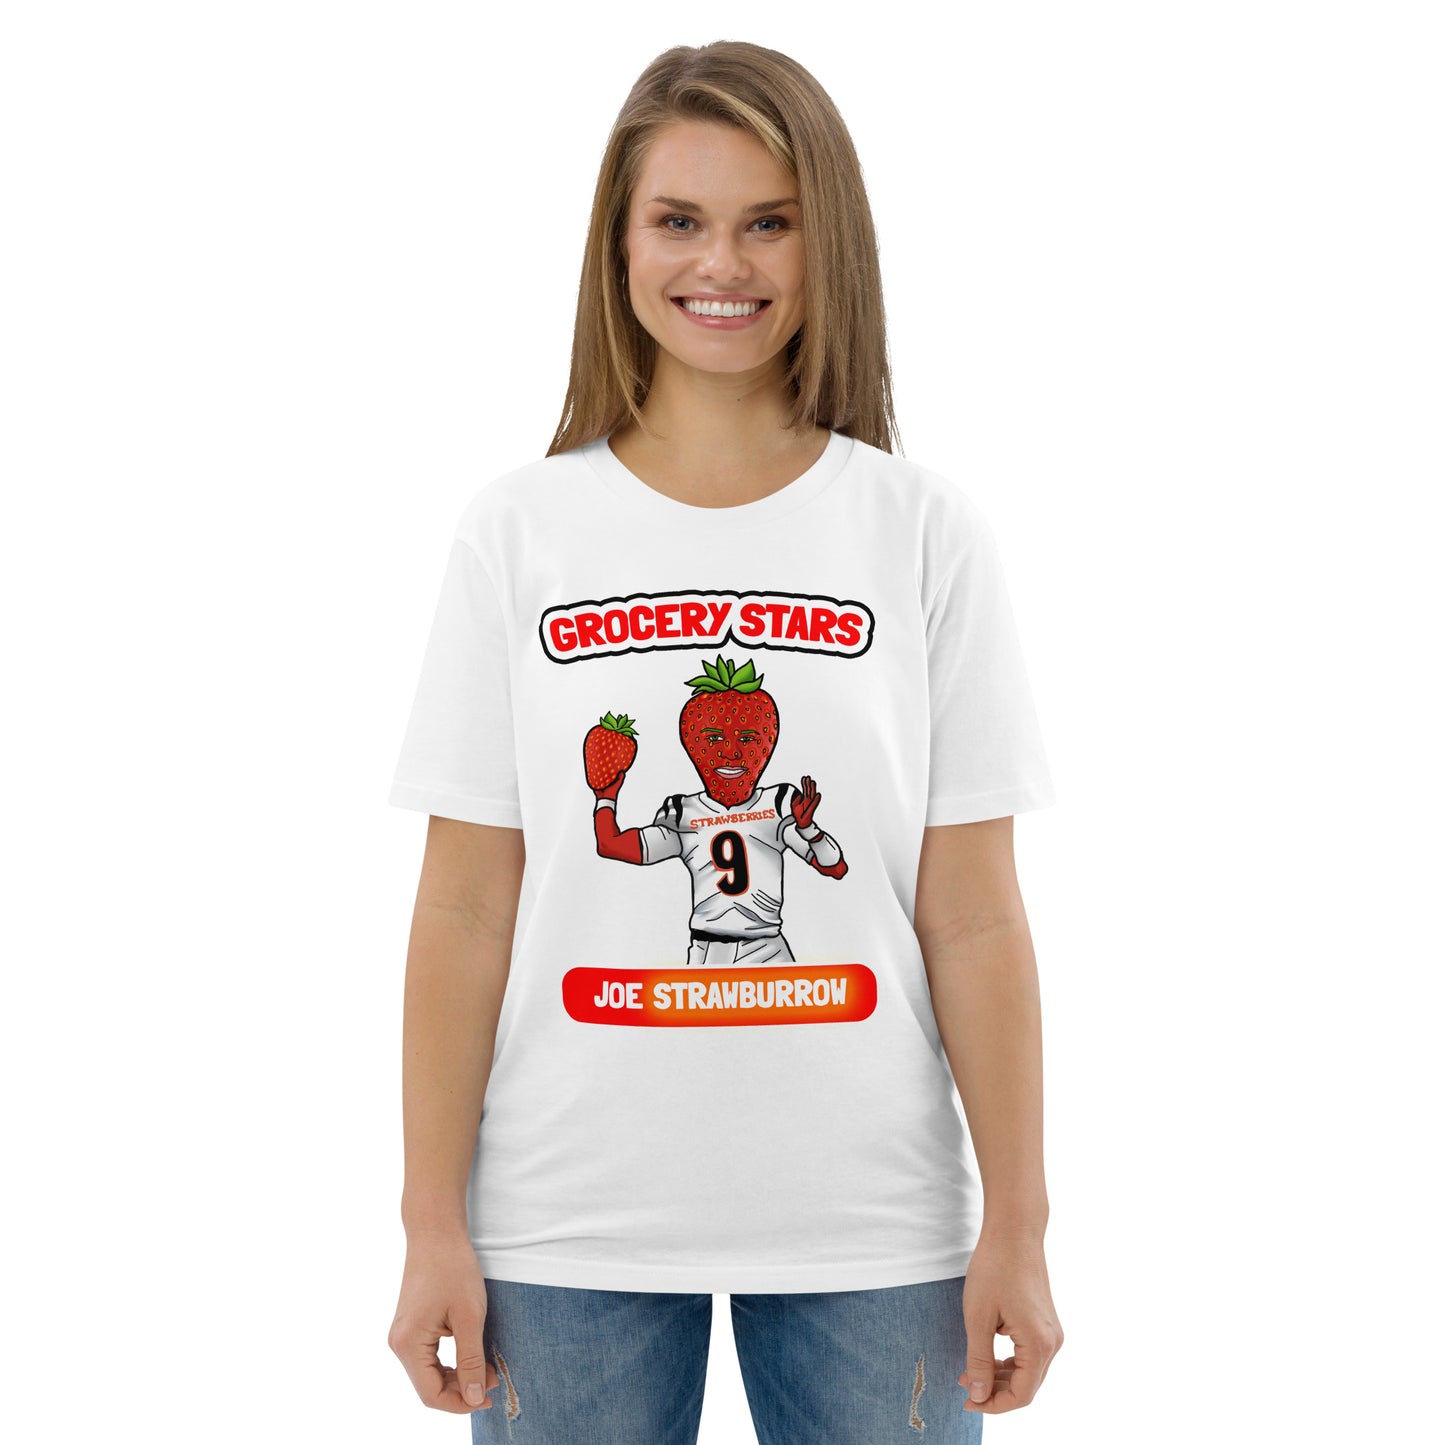 Joe Strawburrow - Adult Organic Cotton T-Shirt